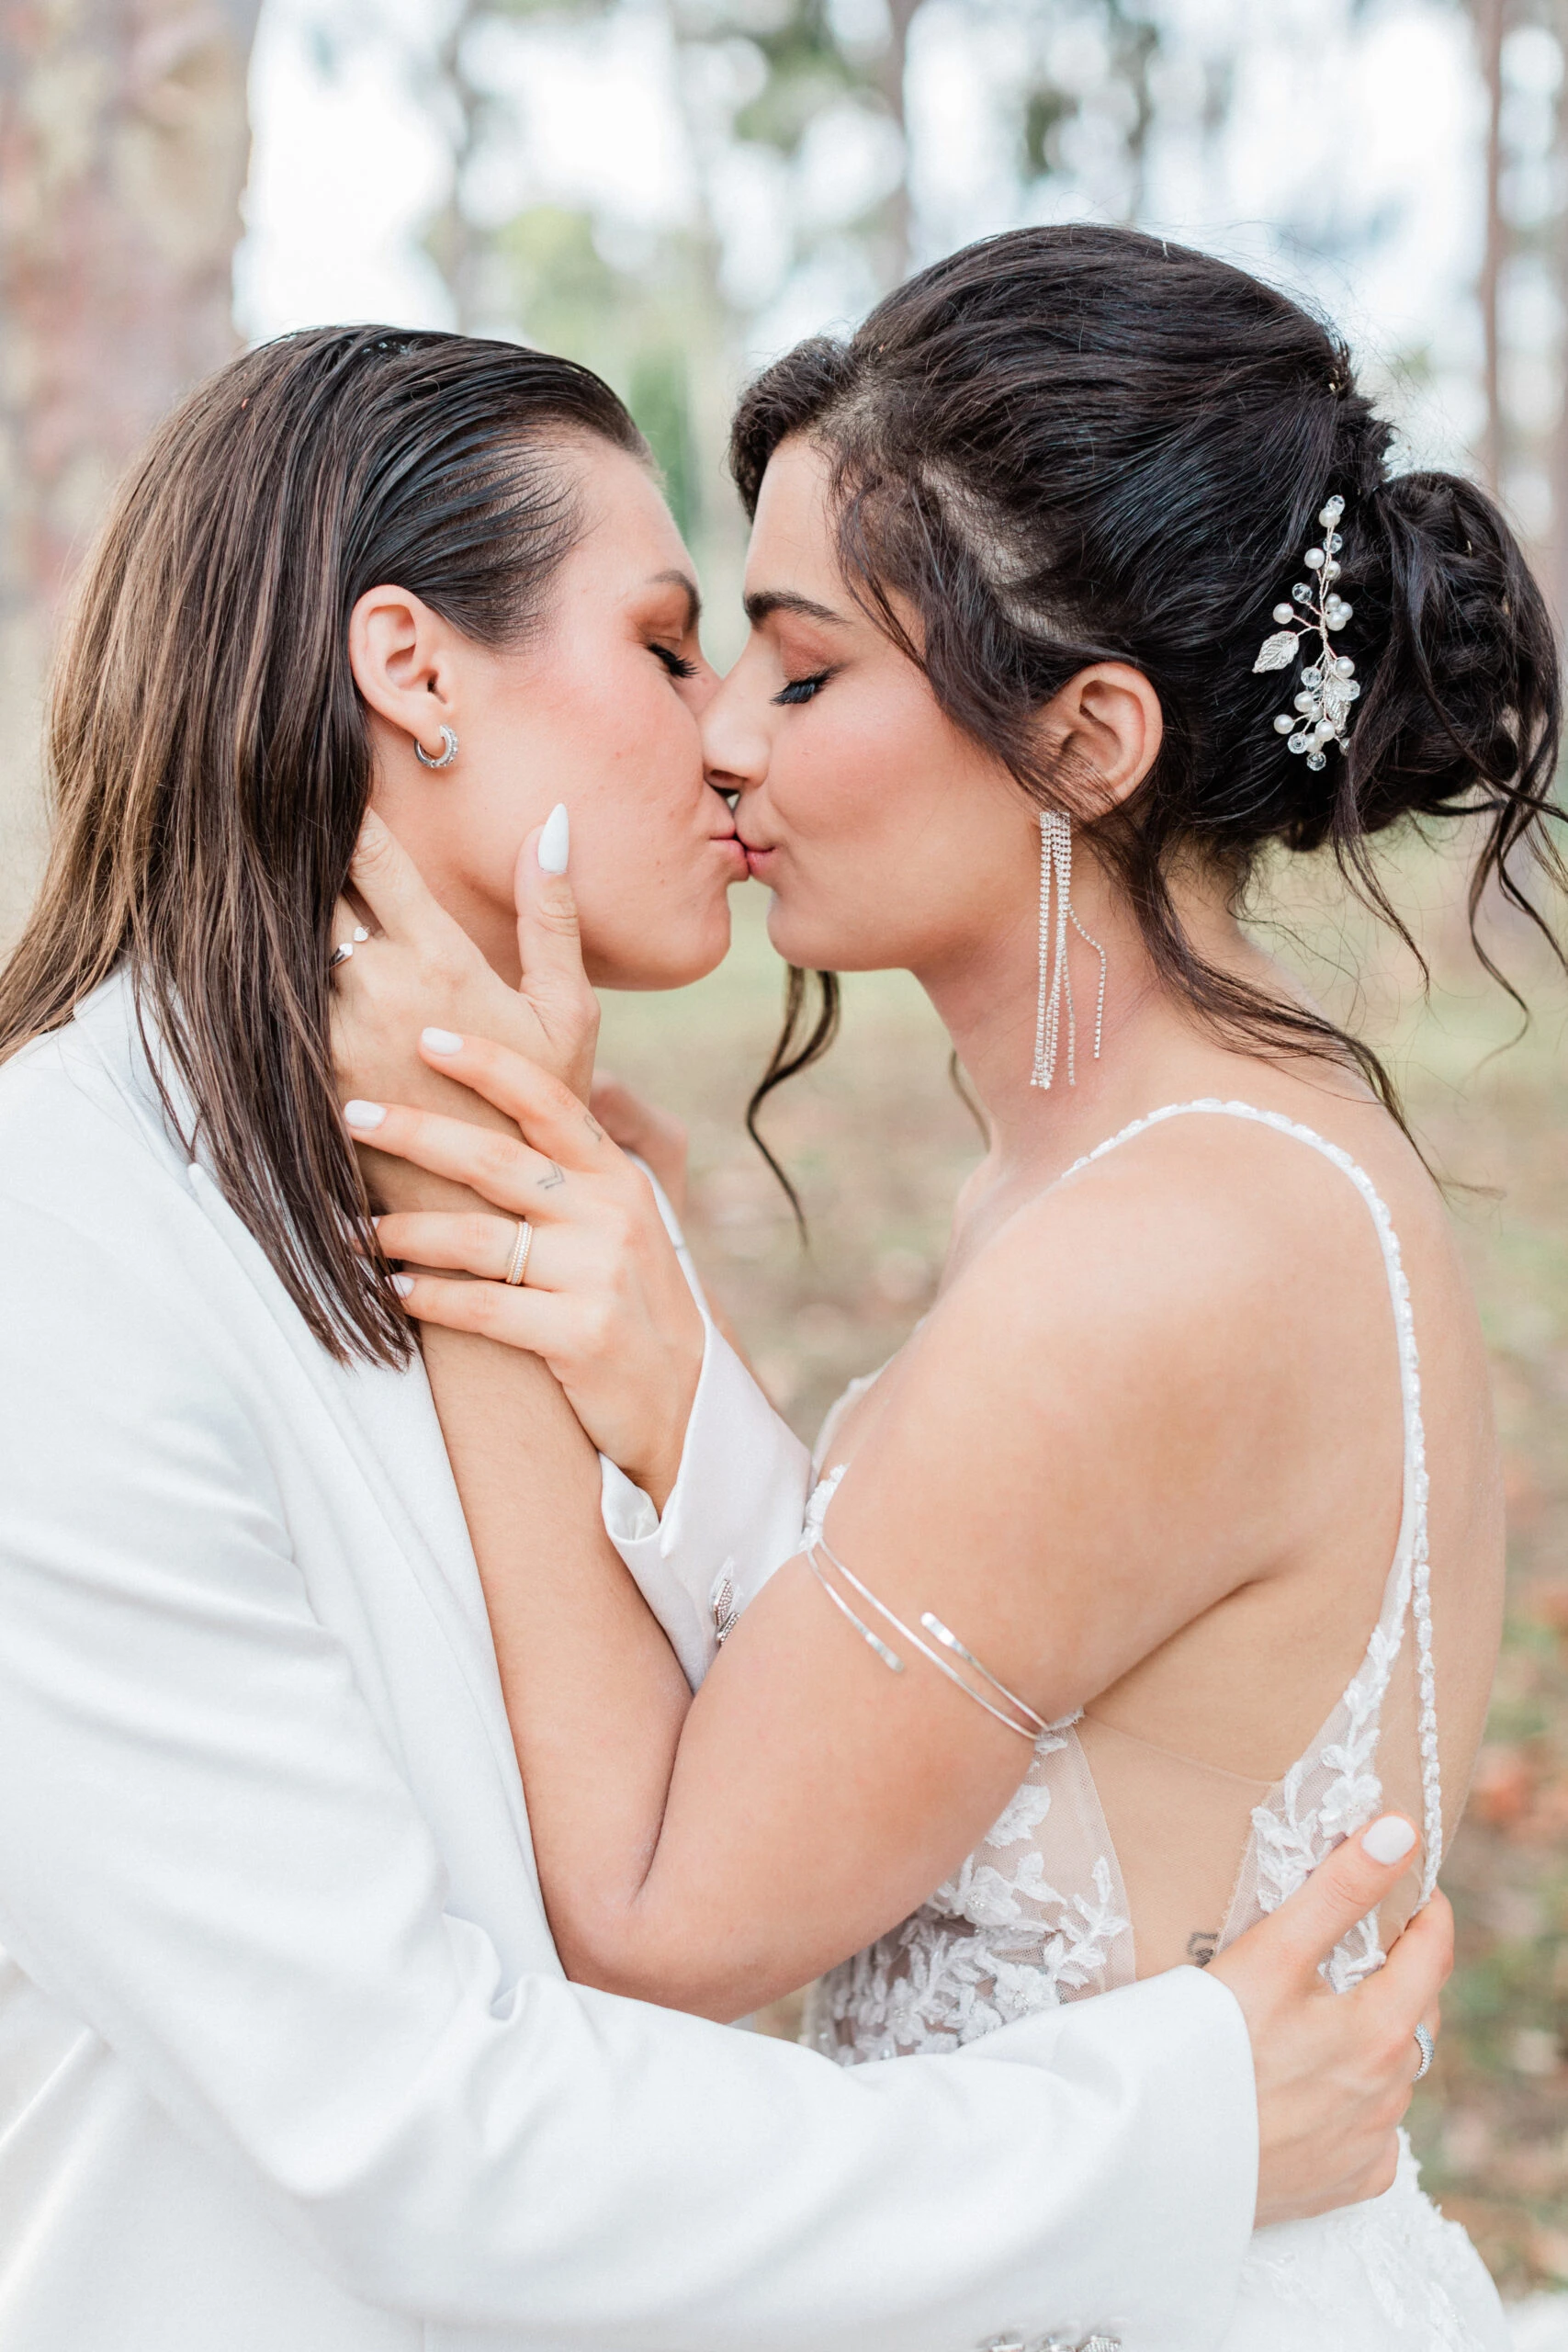 true brides ramona and charlotte kissing on wedding day - Martina Liana 1137